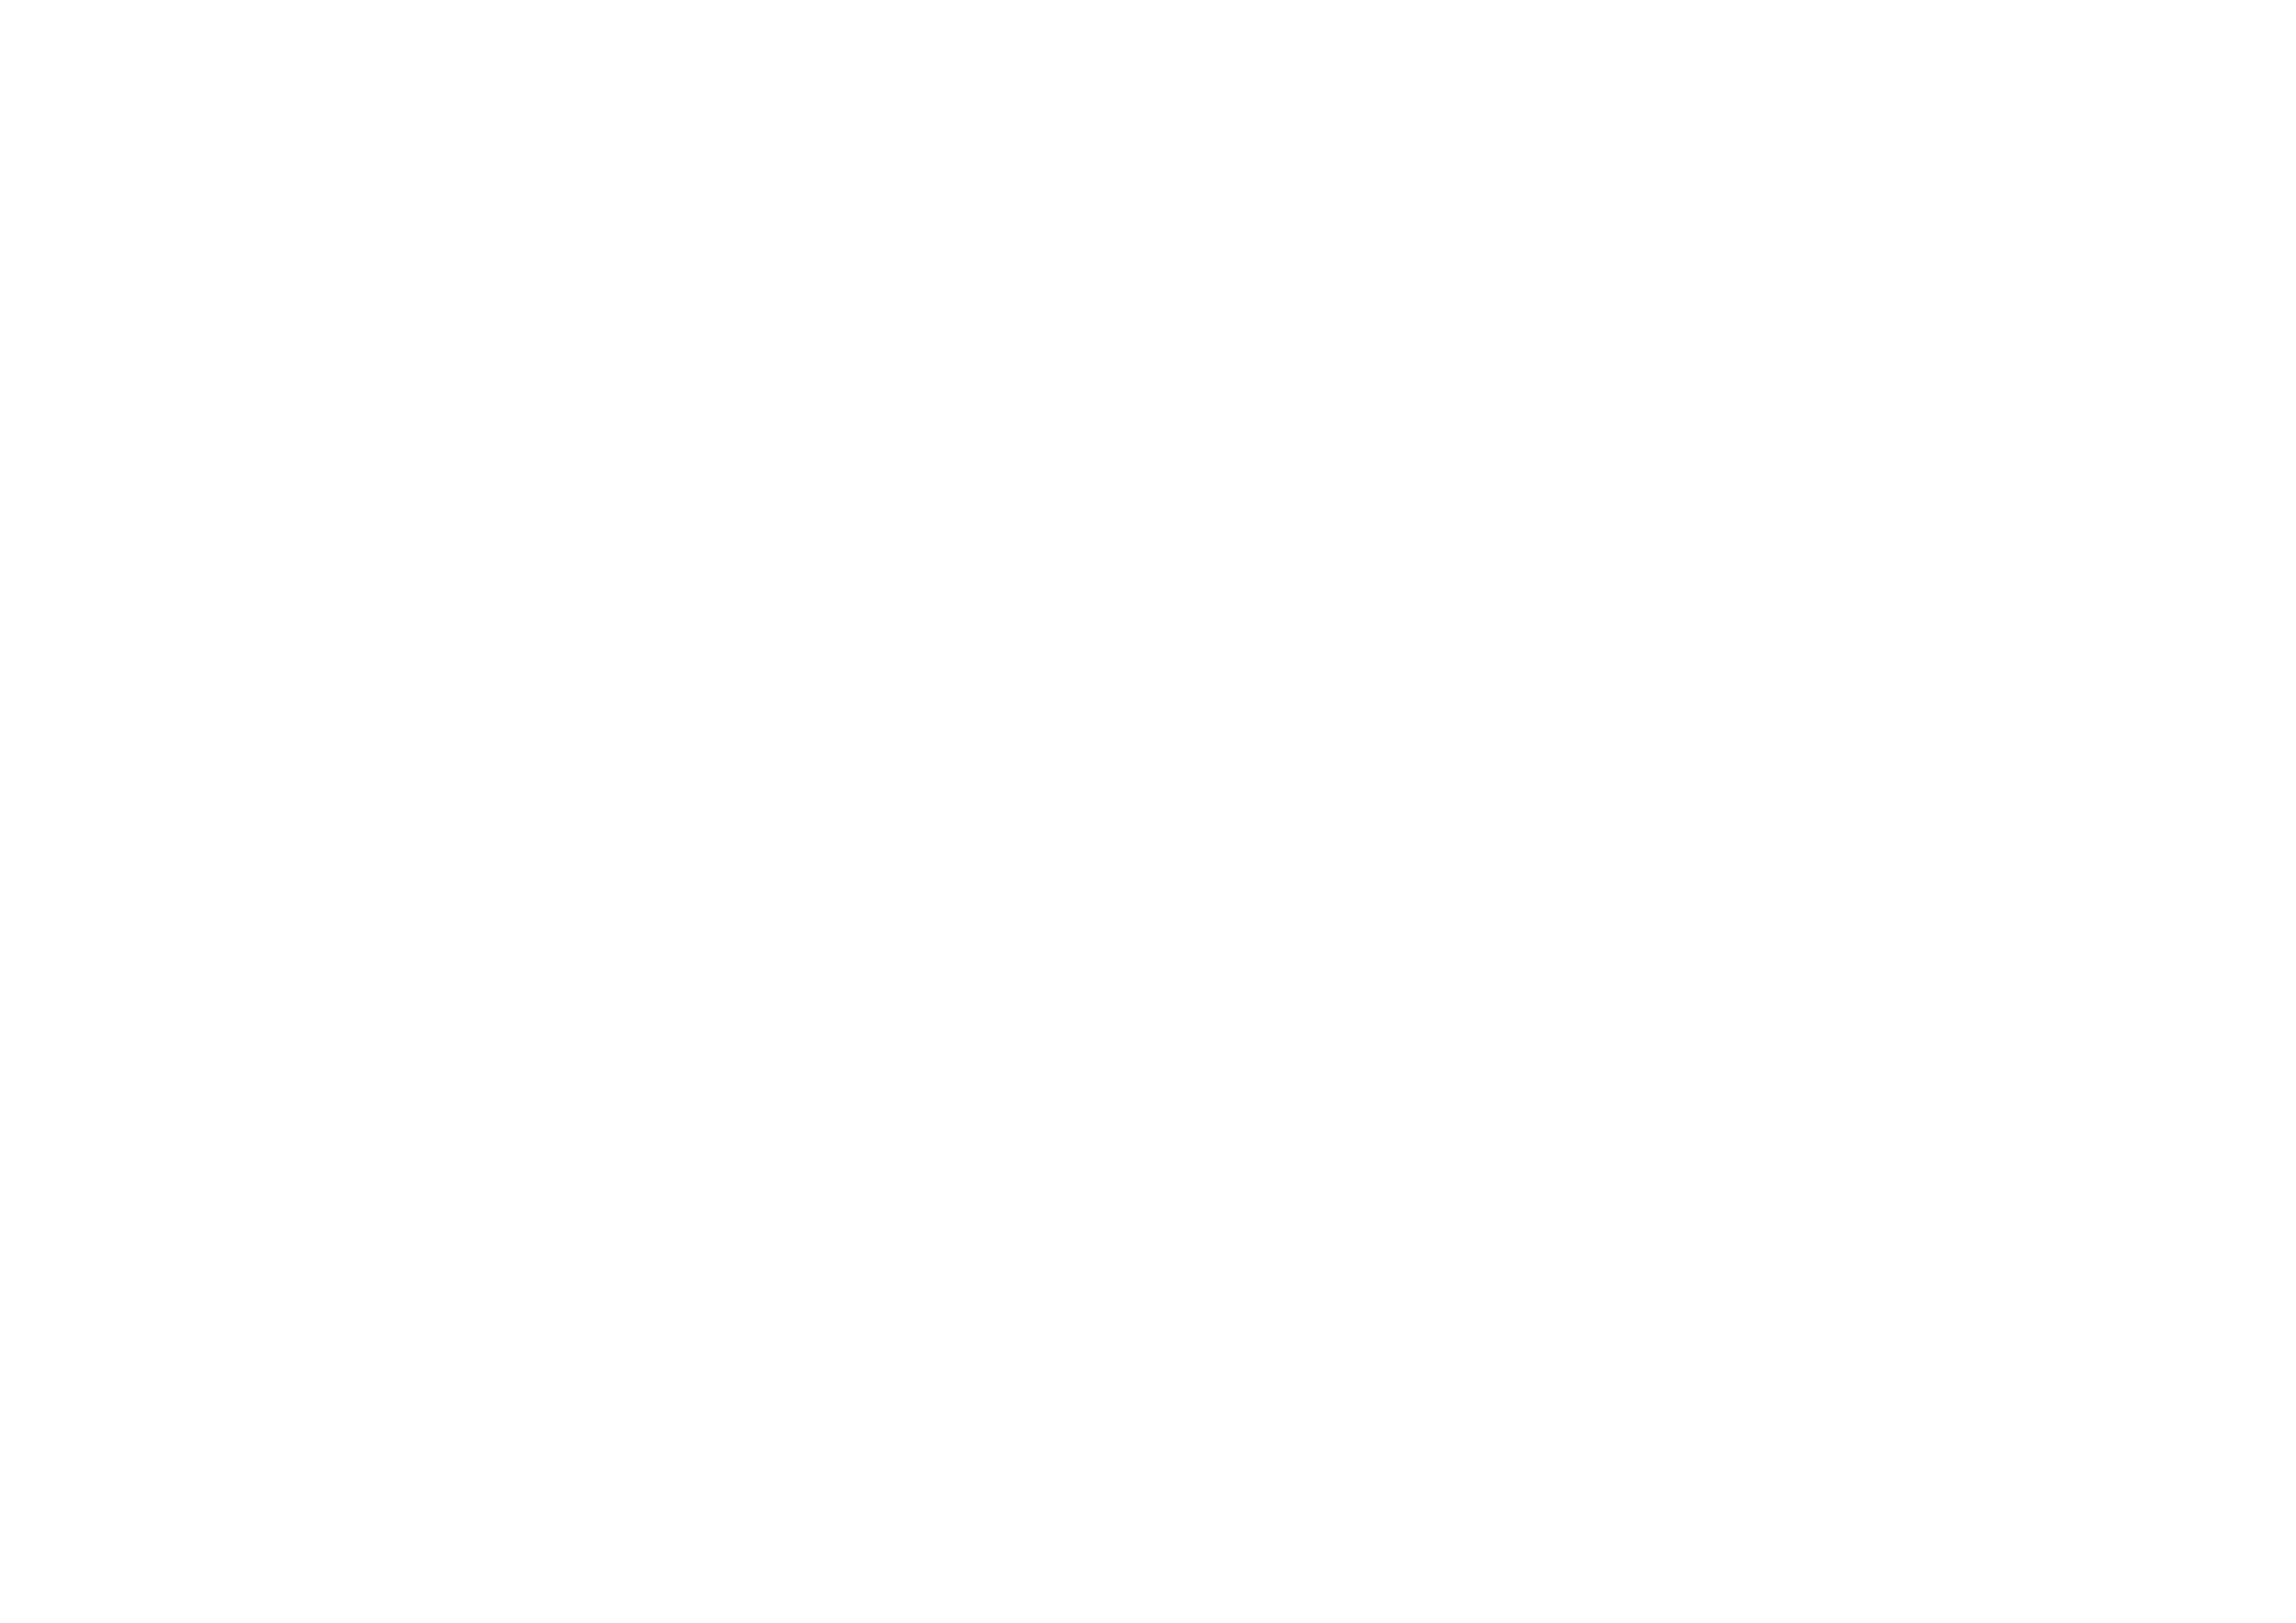 Marketing Magic logo white